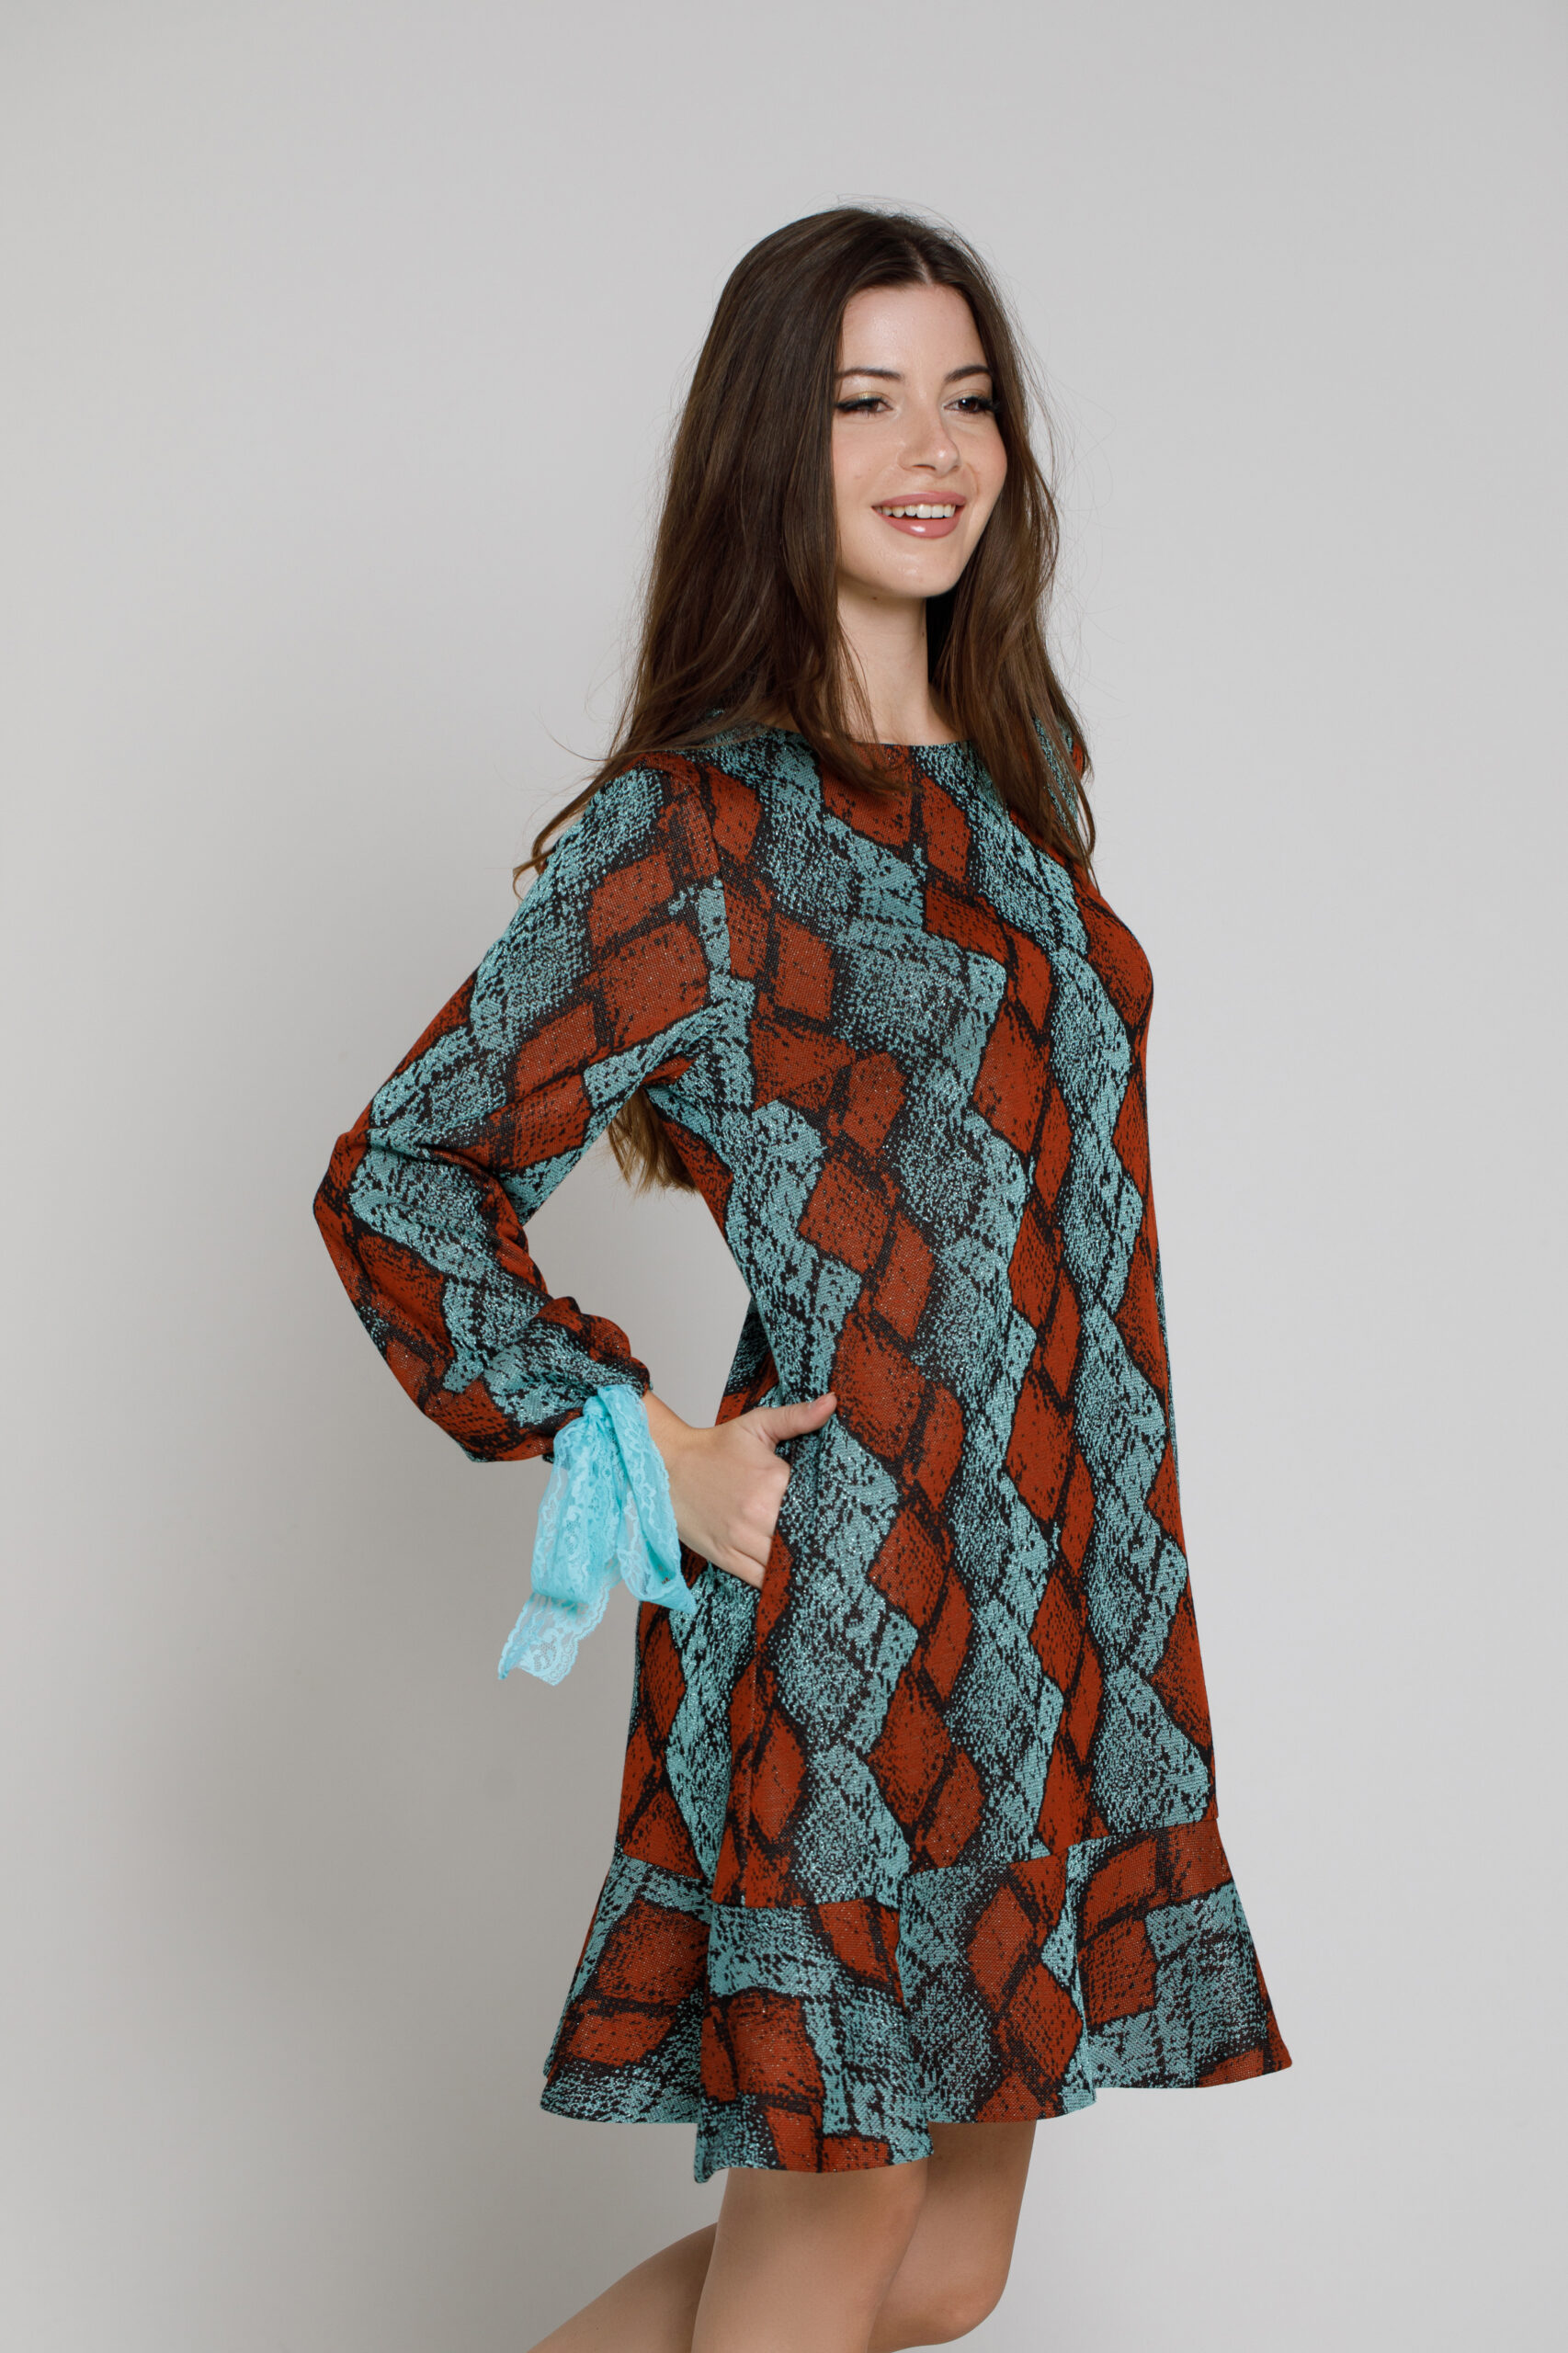 RUELLE jersey dress with ruffles. Natural fabrics, original design, handmade embroidery